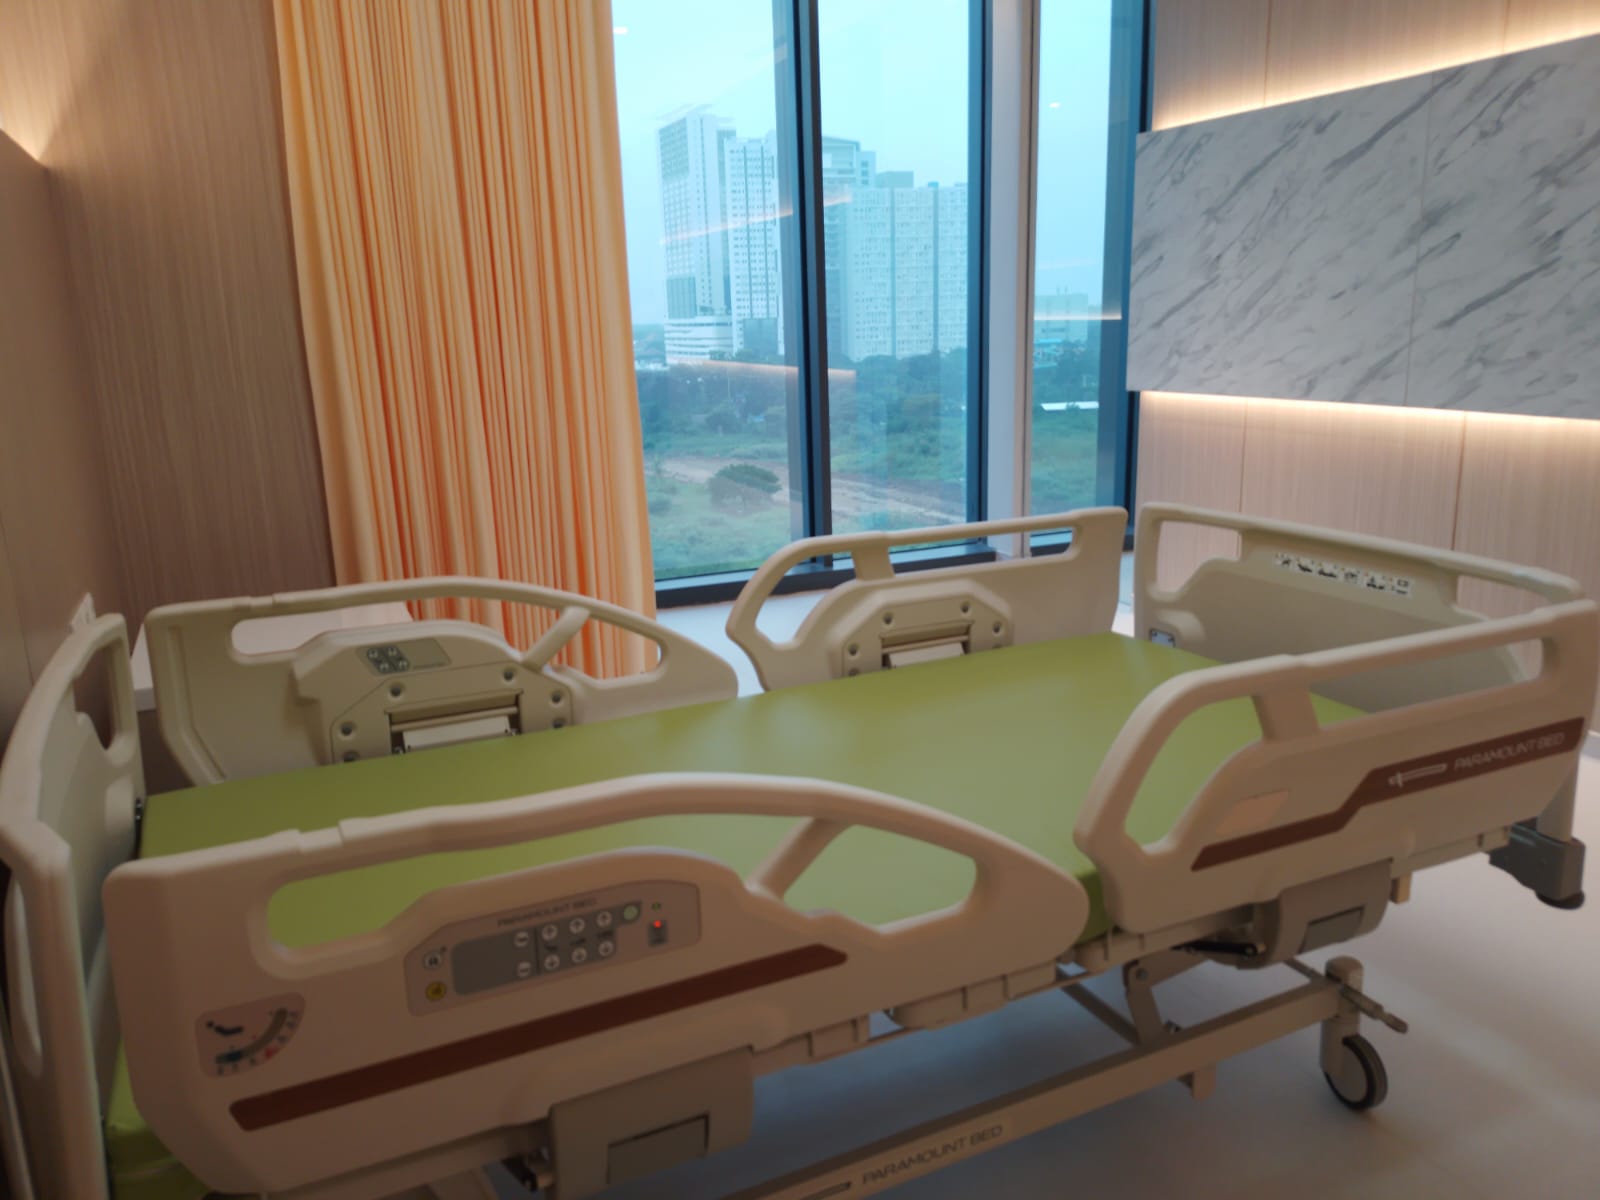 Berkomitmen Meningkatkan Kesehatan Masyarakat, Ciputra Group Hadirkan Ciputra Hospital Surabaya